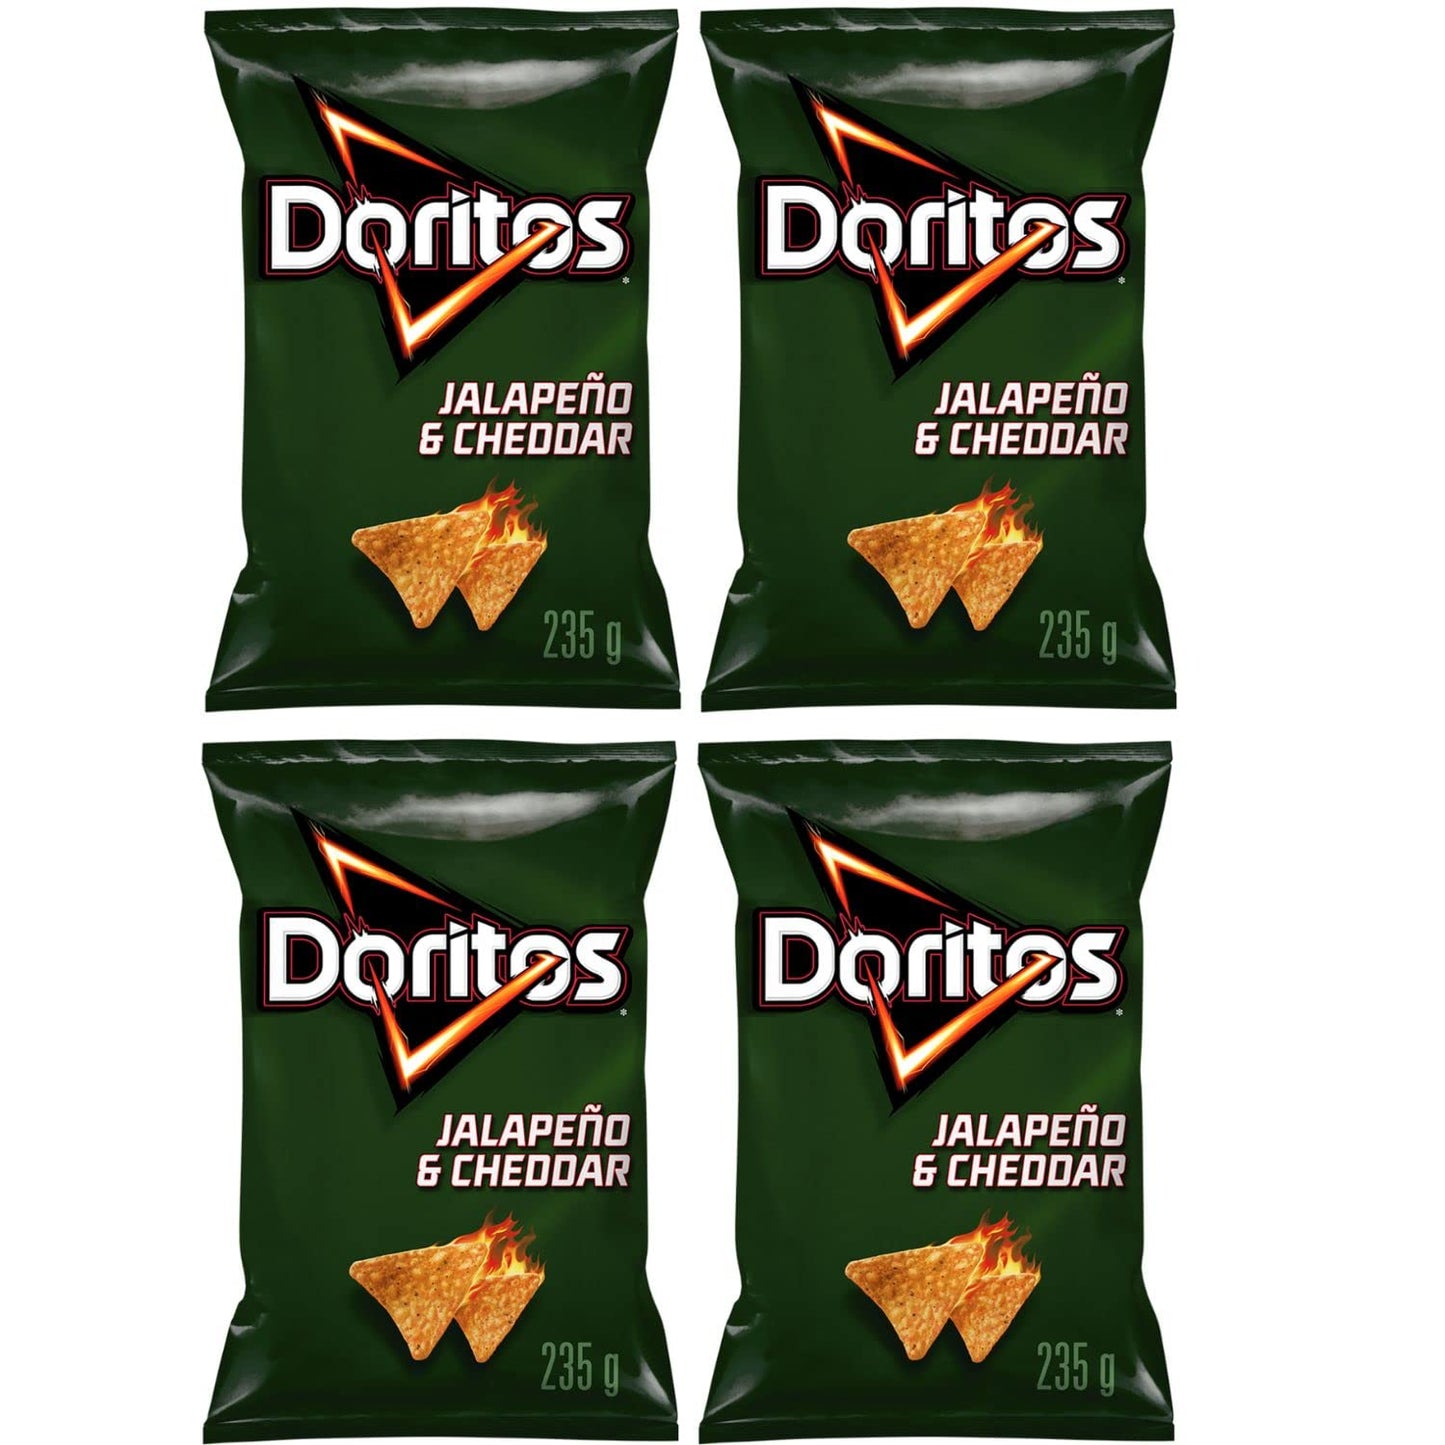 Doritos Jalapeno and Cheddar Tortilla Chips pack of 4